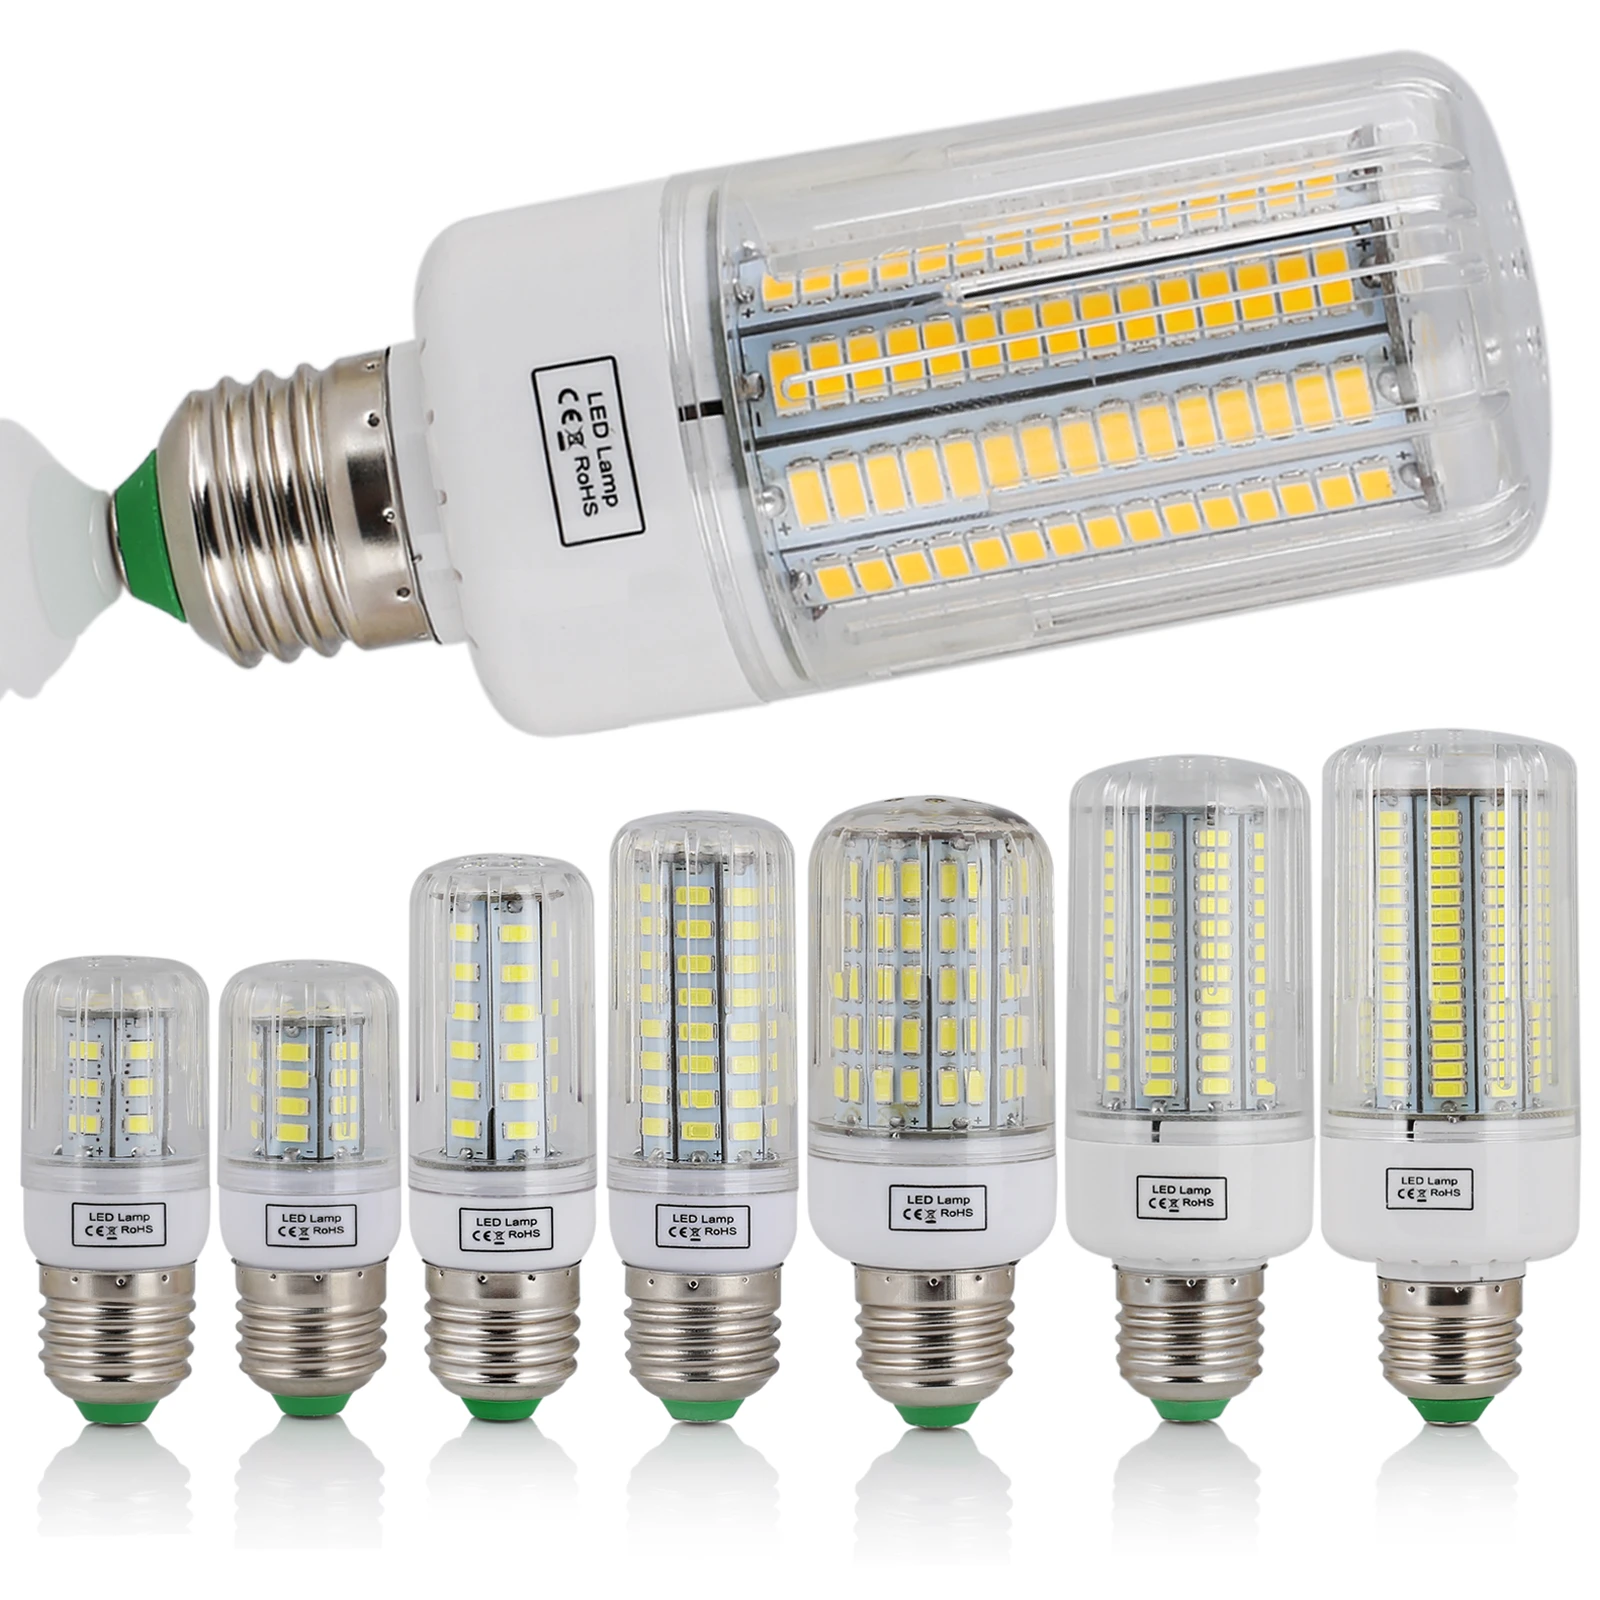 220V-240V E27 LED SMD 5730 Lamp Corn Lights Spotlight Bulb Warm White Light Neu